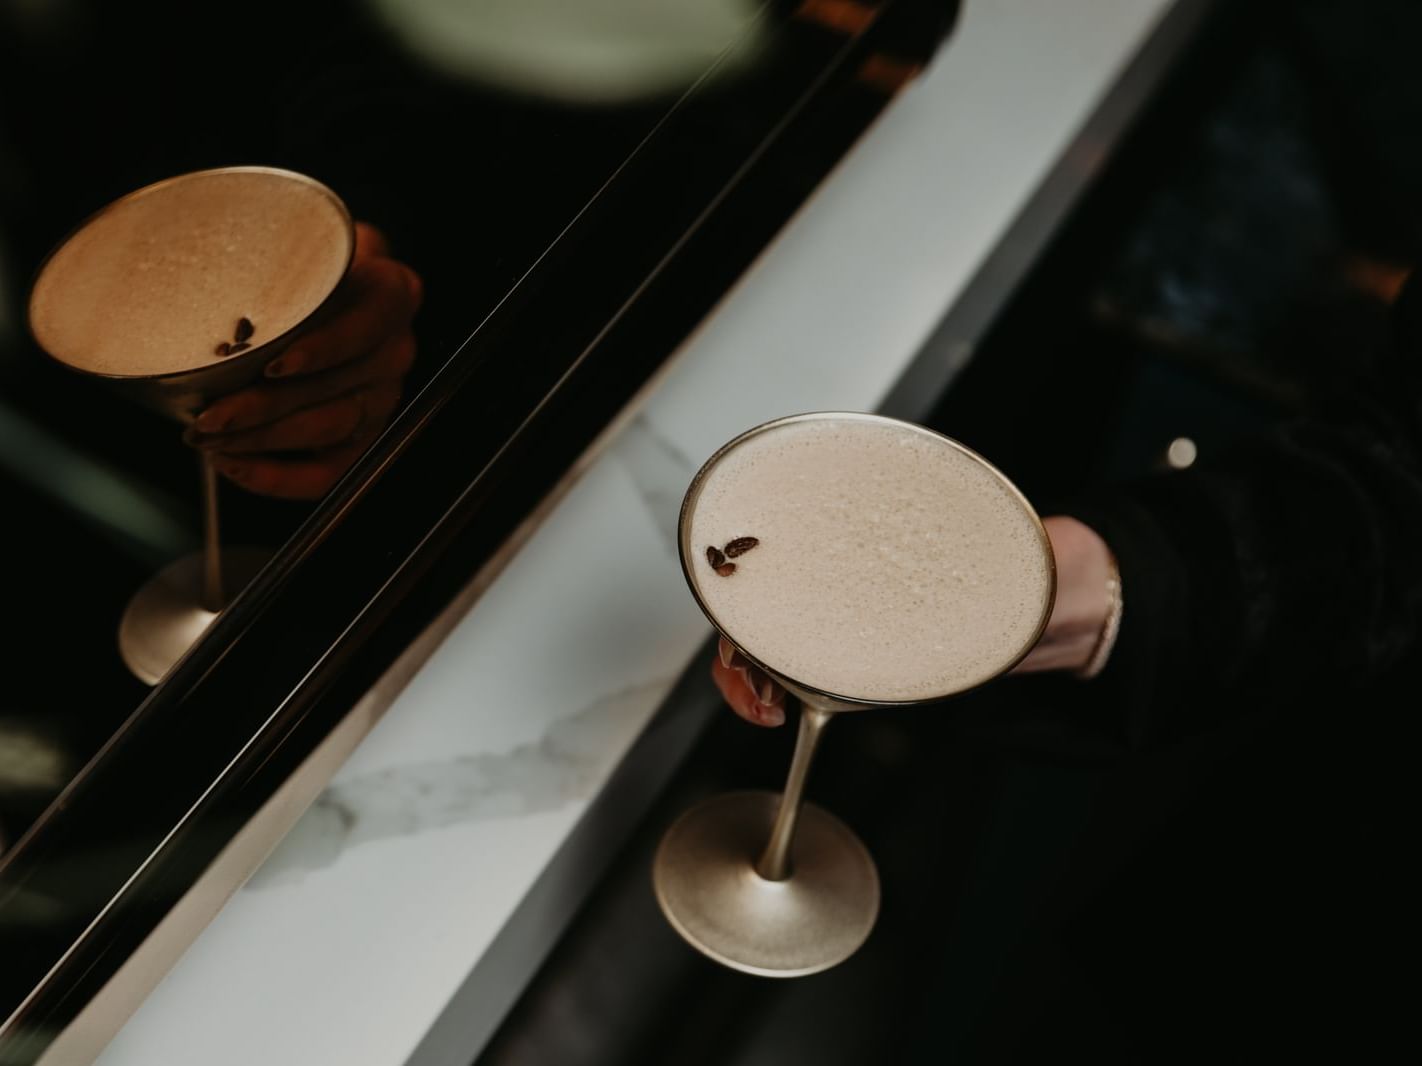 A reflection of an Espresso Martini